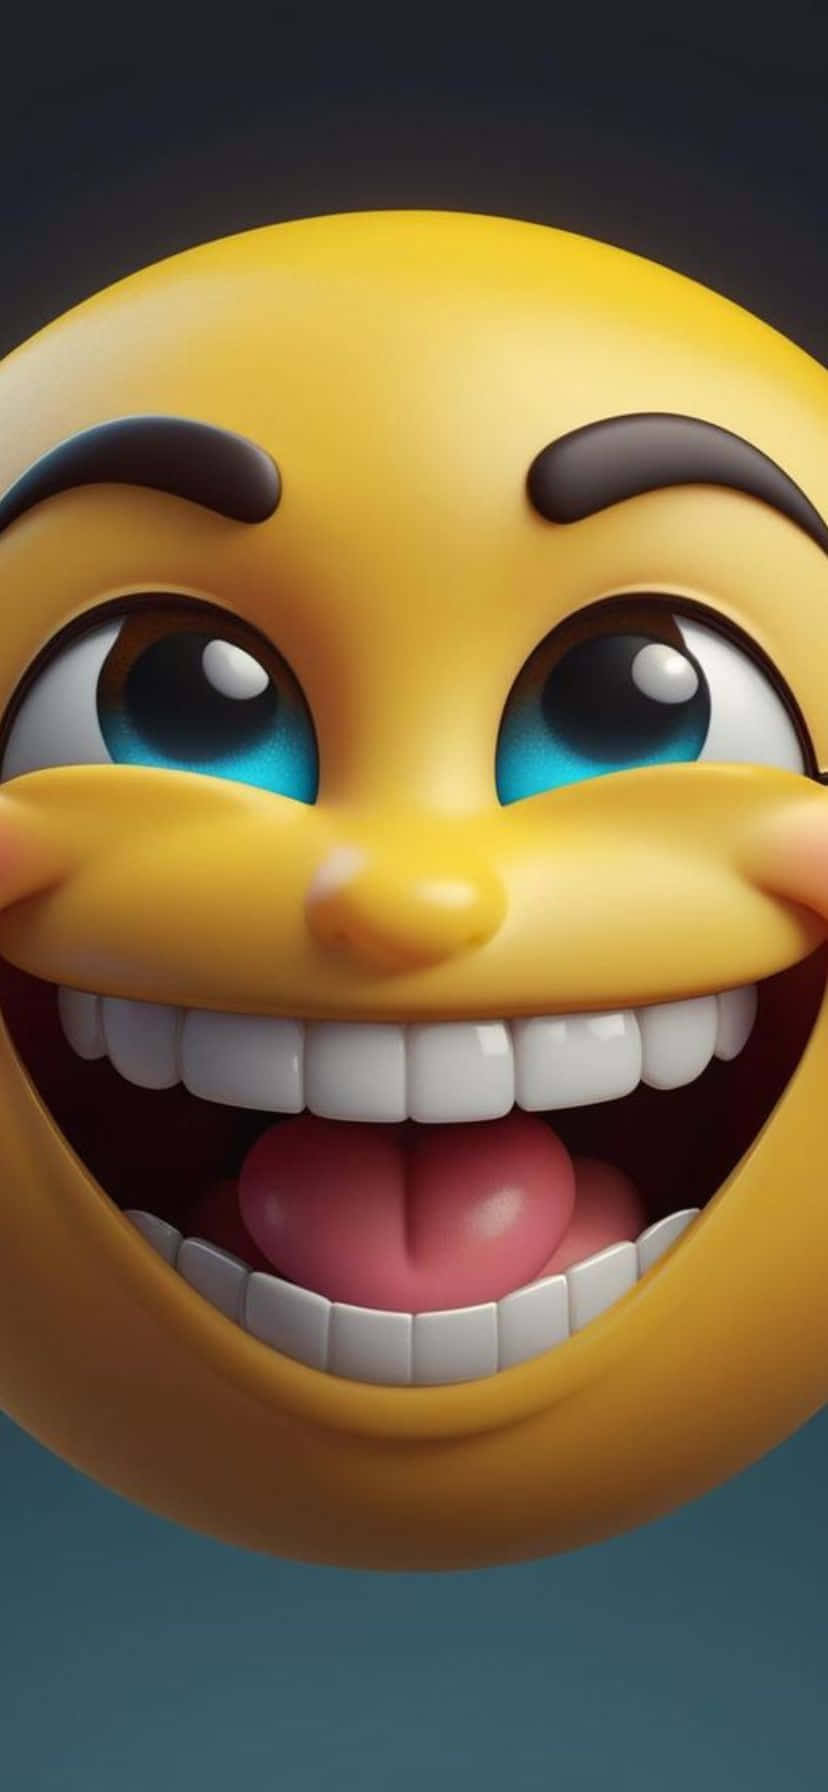 Grinning Face Emoji Closeup Wallpaper